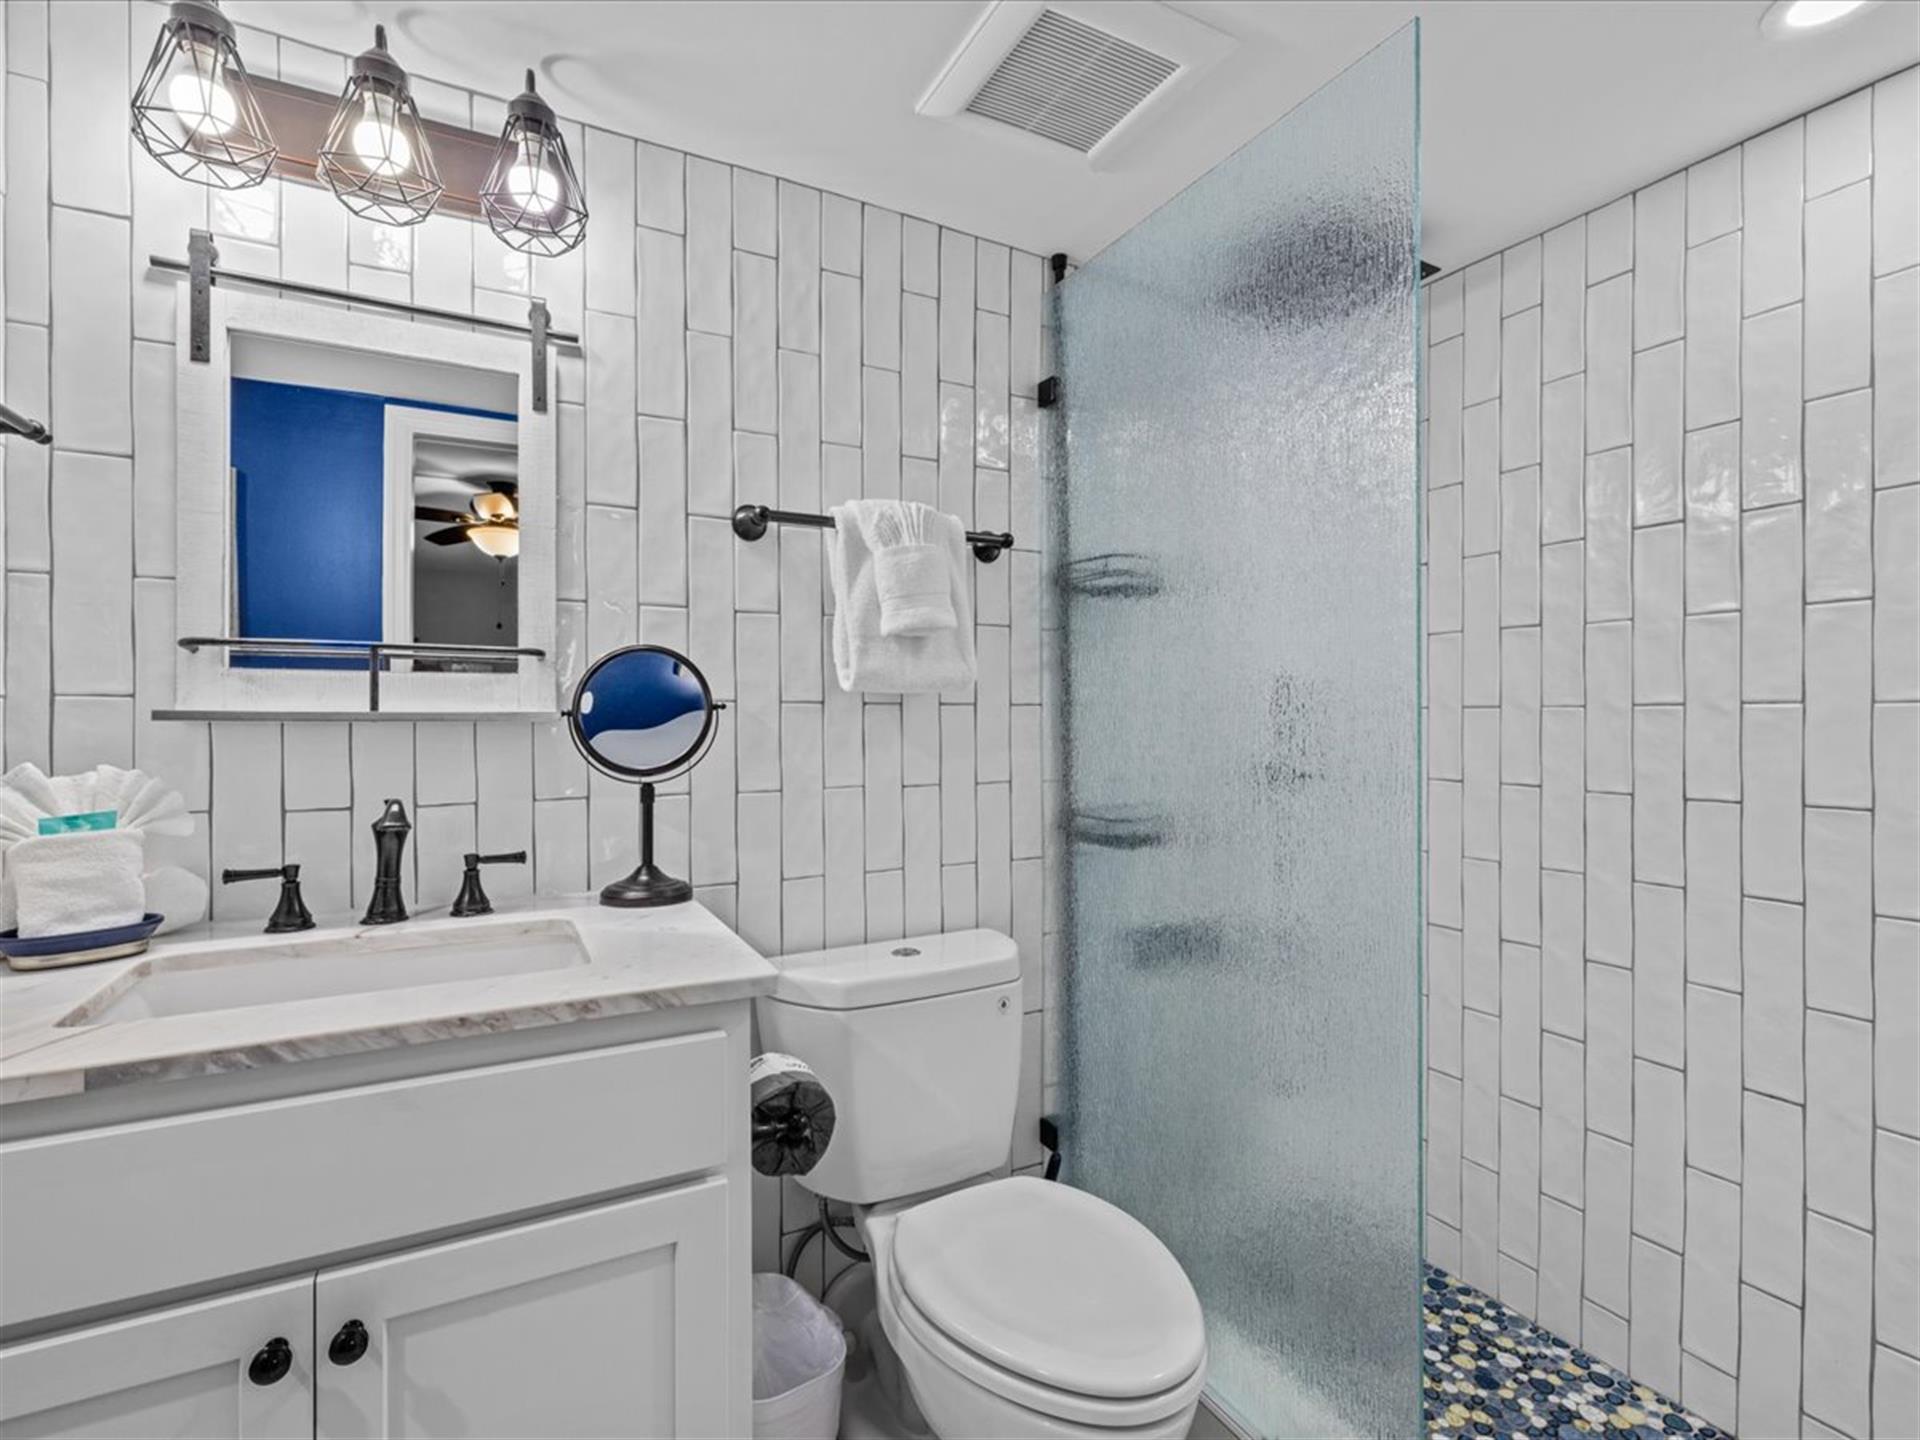 HSRC 713 Bathroom With WalkIn Shower